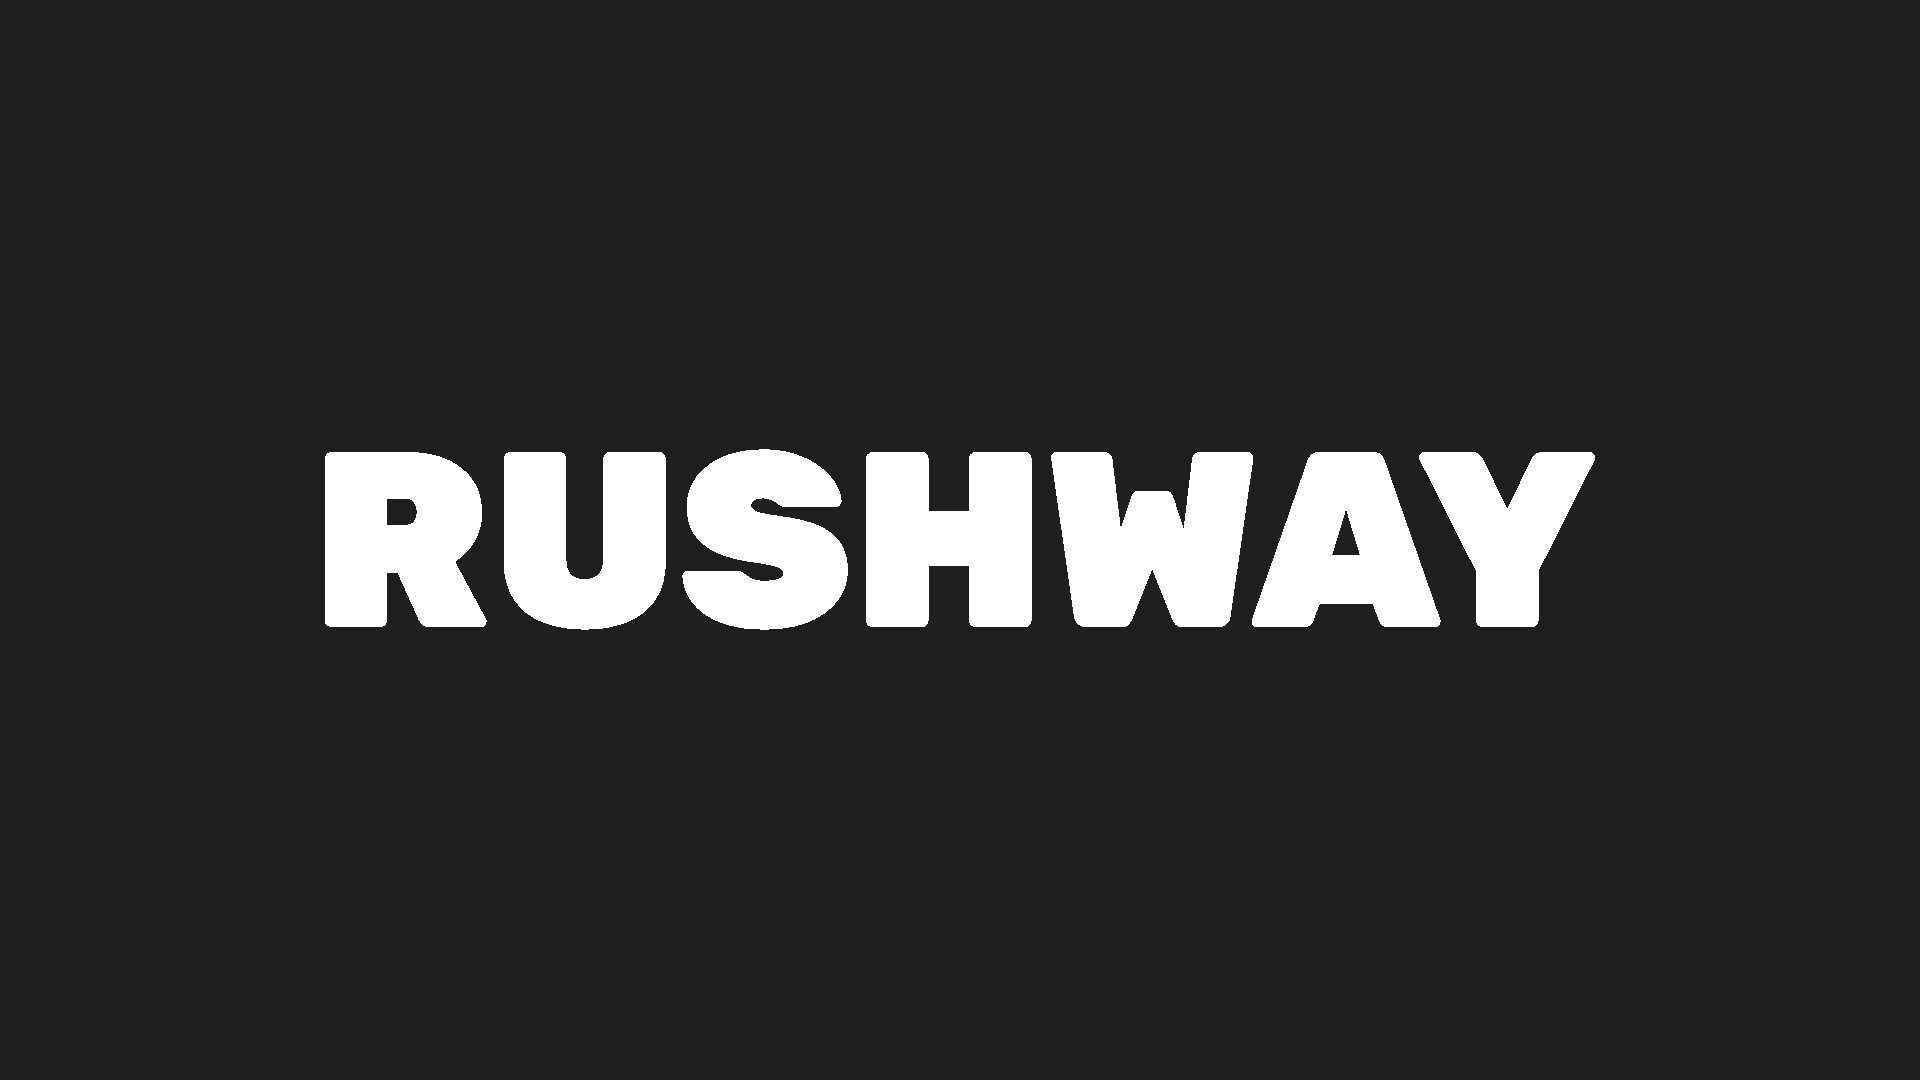 RUSHWAY